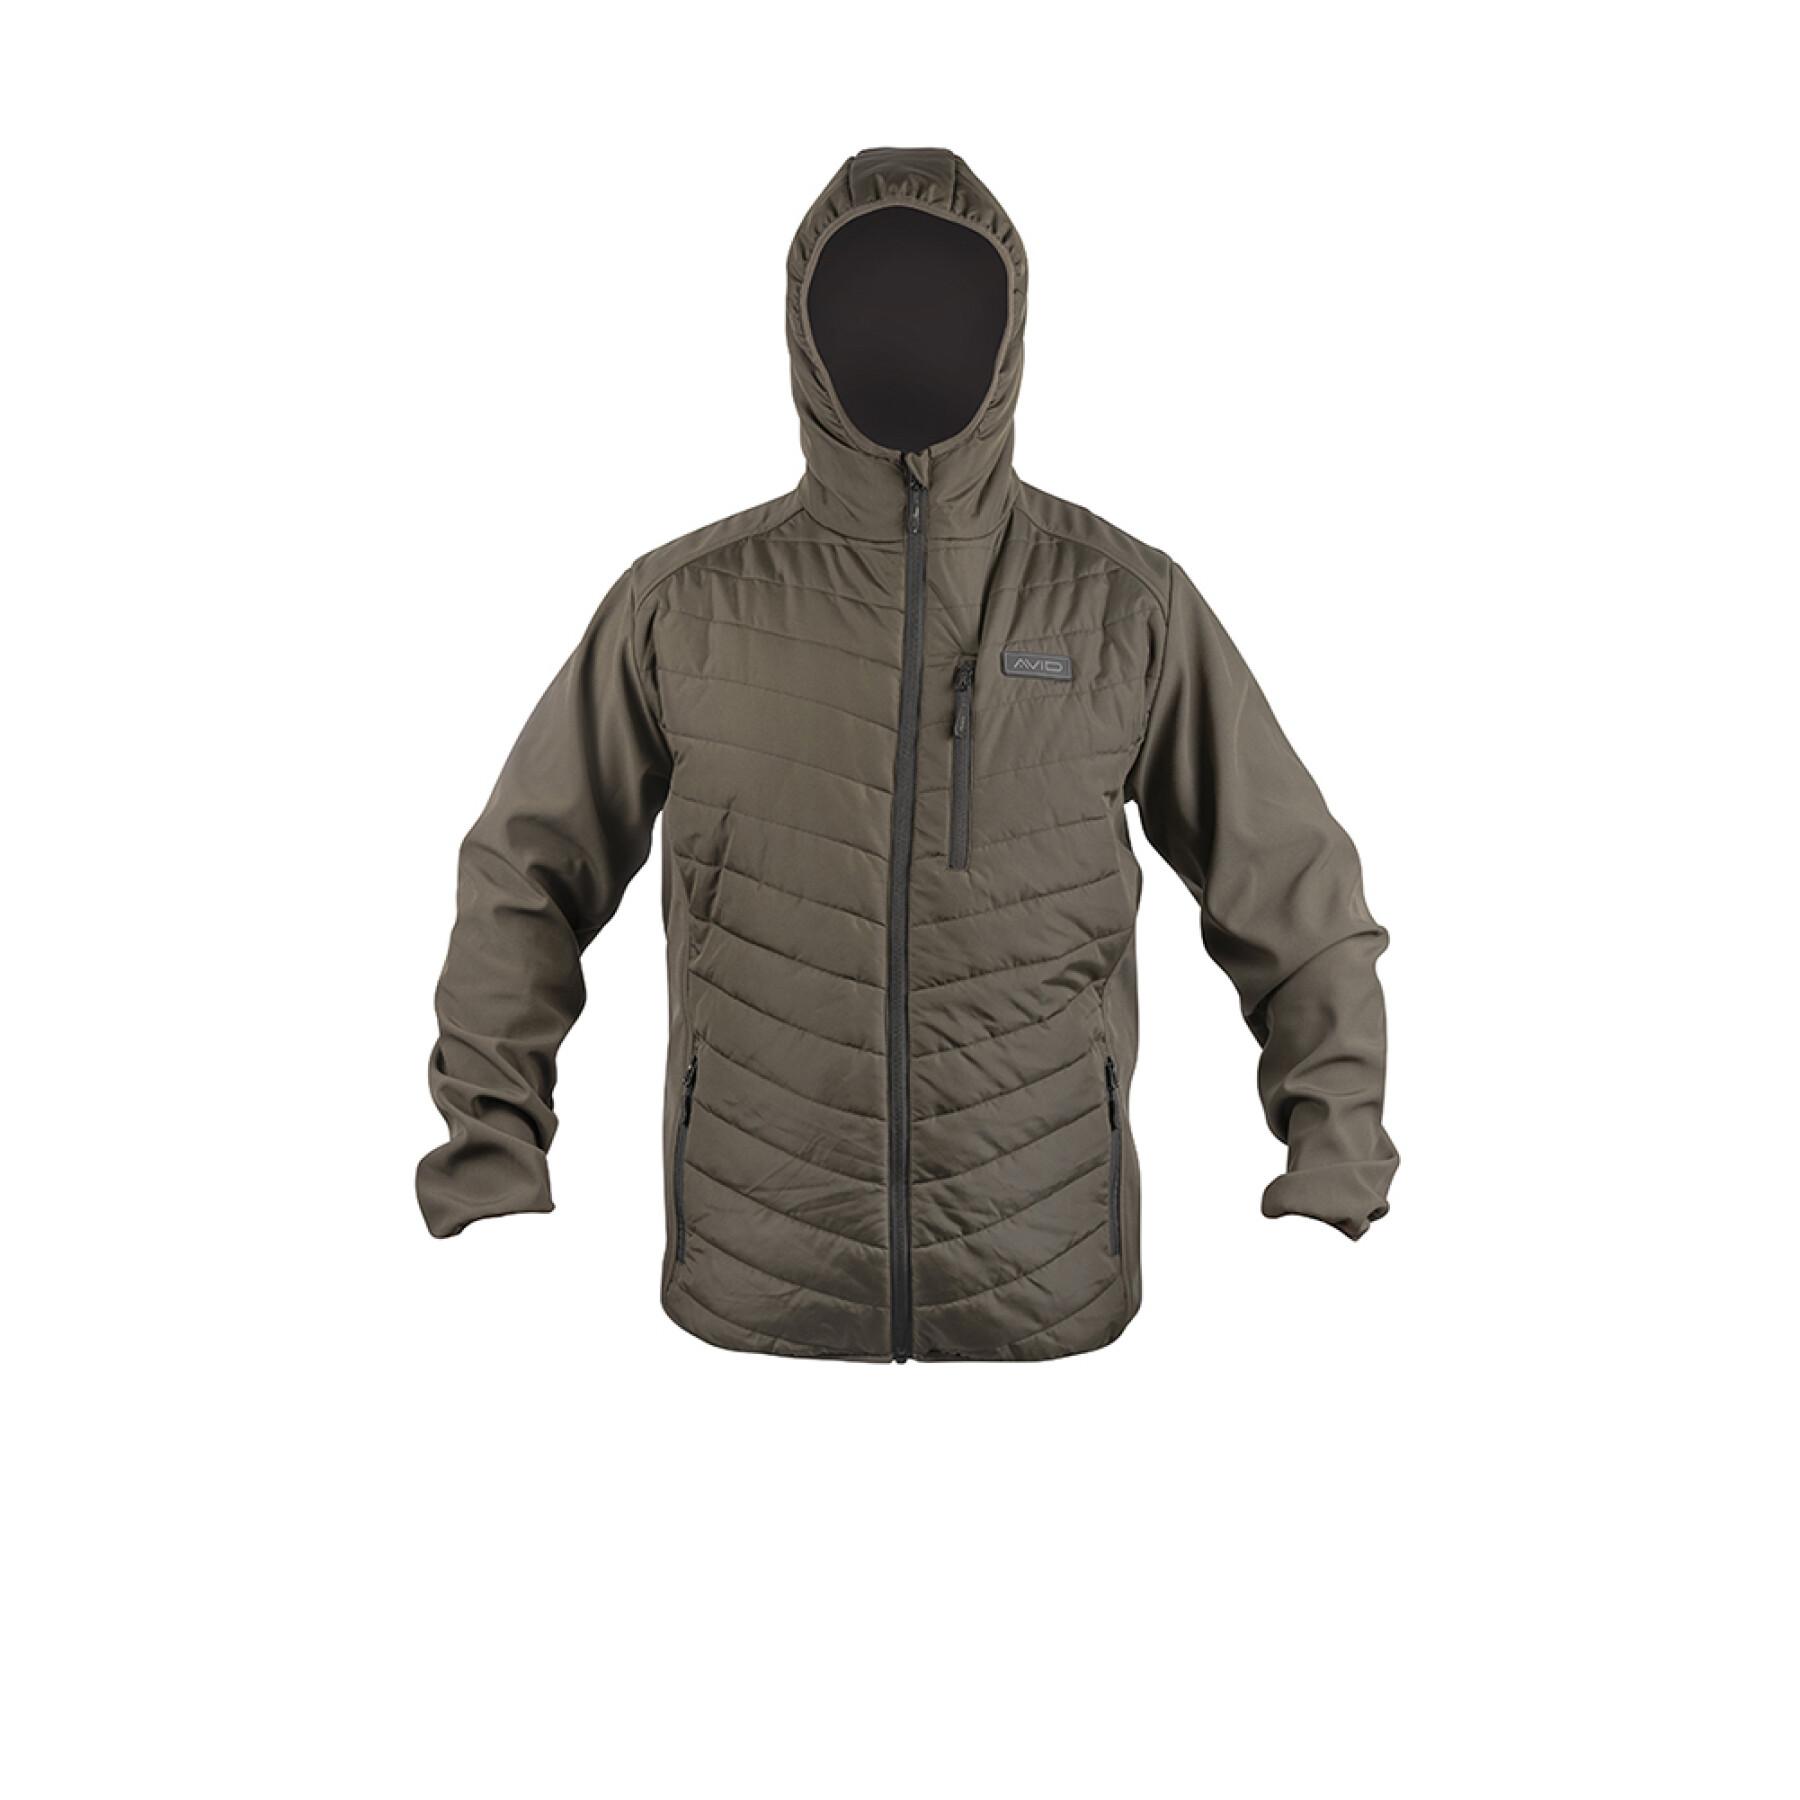 Waterproof jacket Avid thermite pro